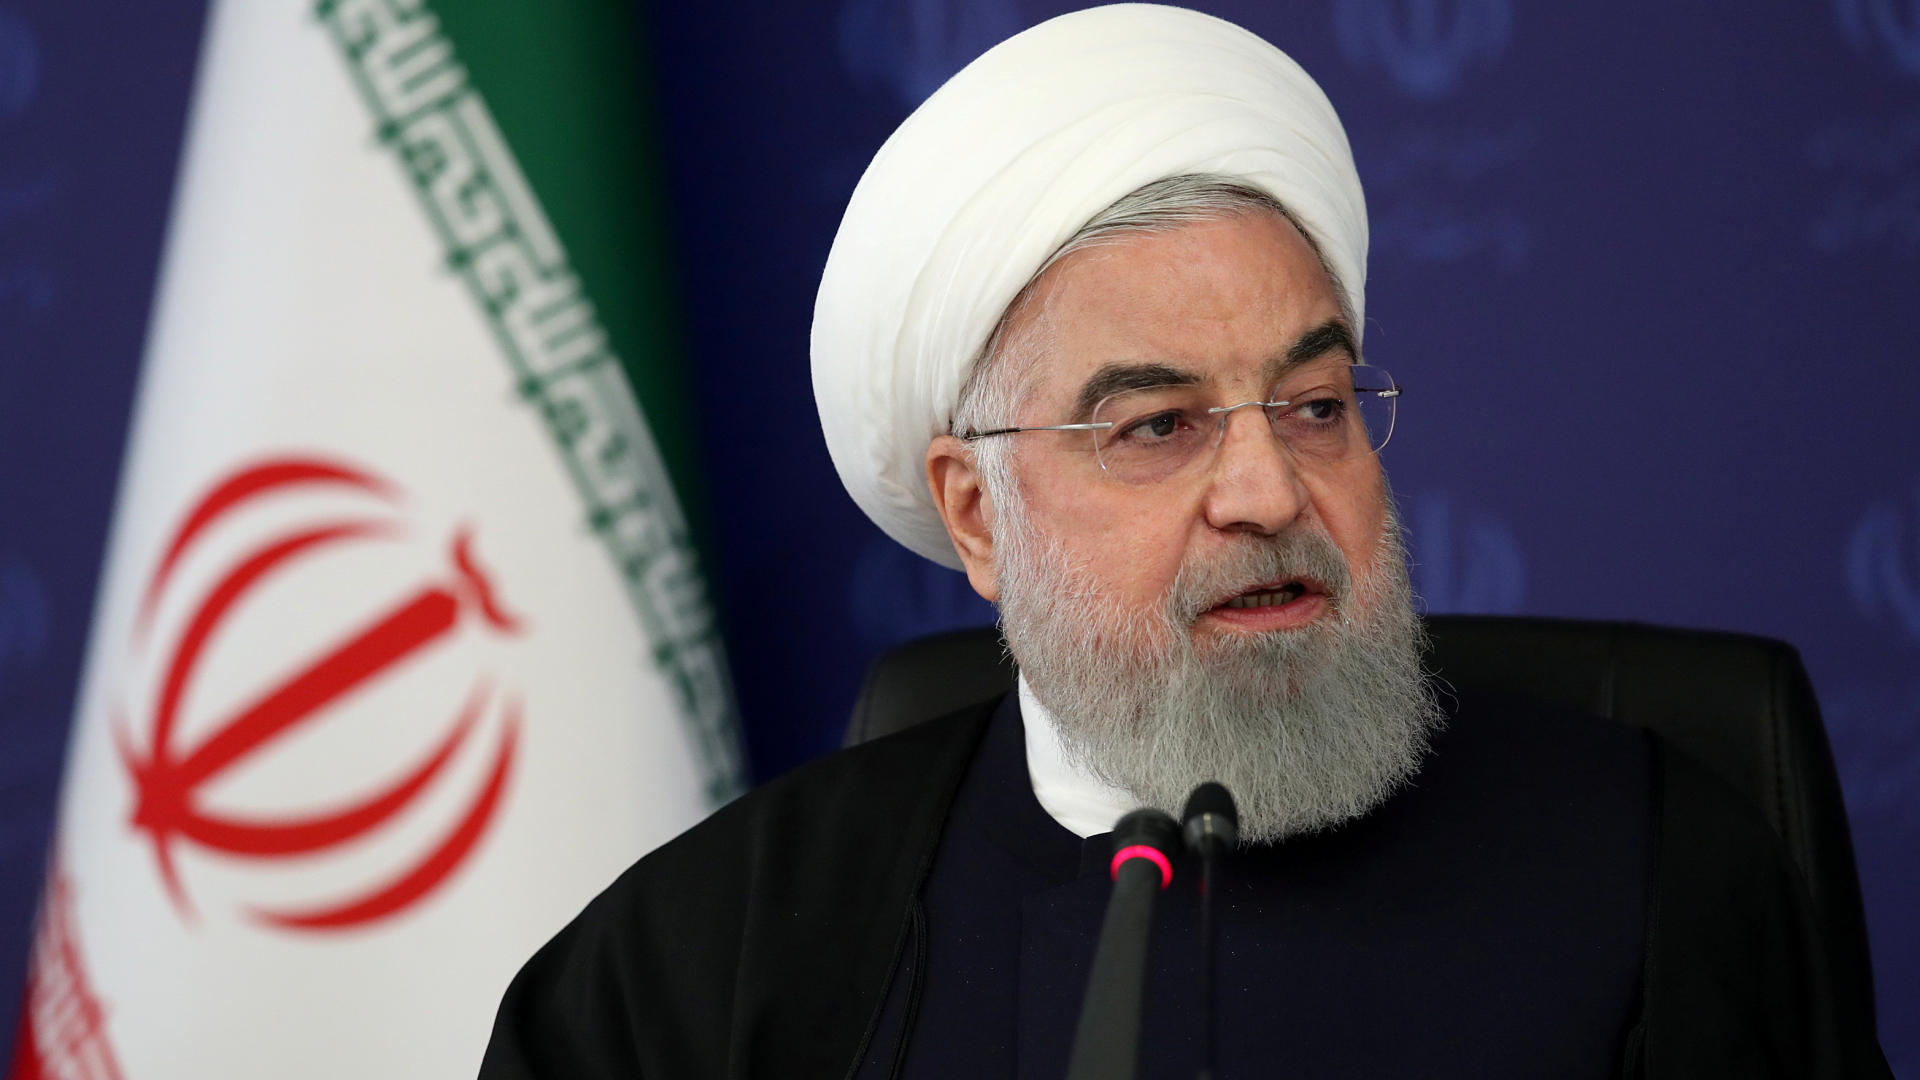 Der iranische Präsident Hassan Rouhani spricht am 1. April 2020 im Parlament zur Corona-Krise. | VIA REUTERS